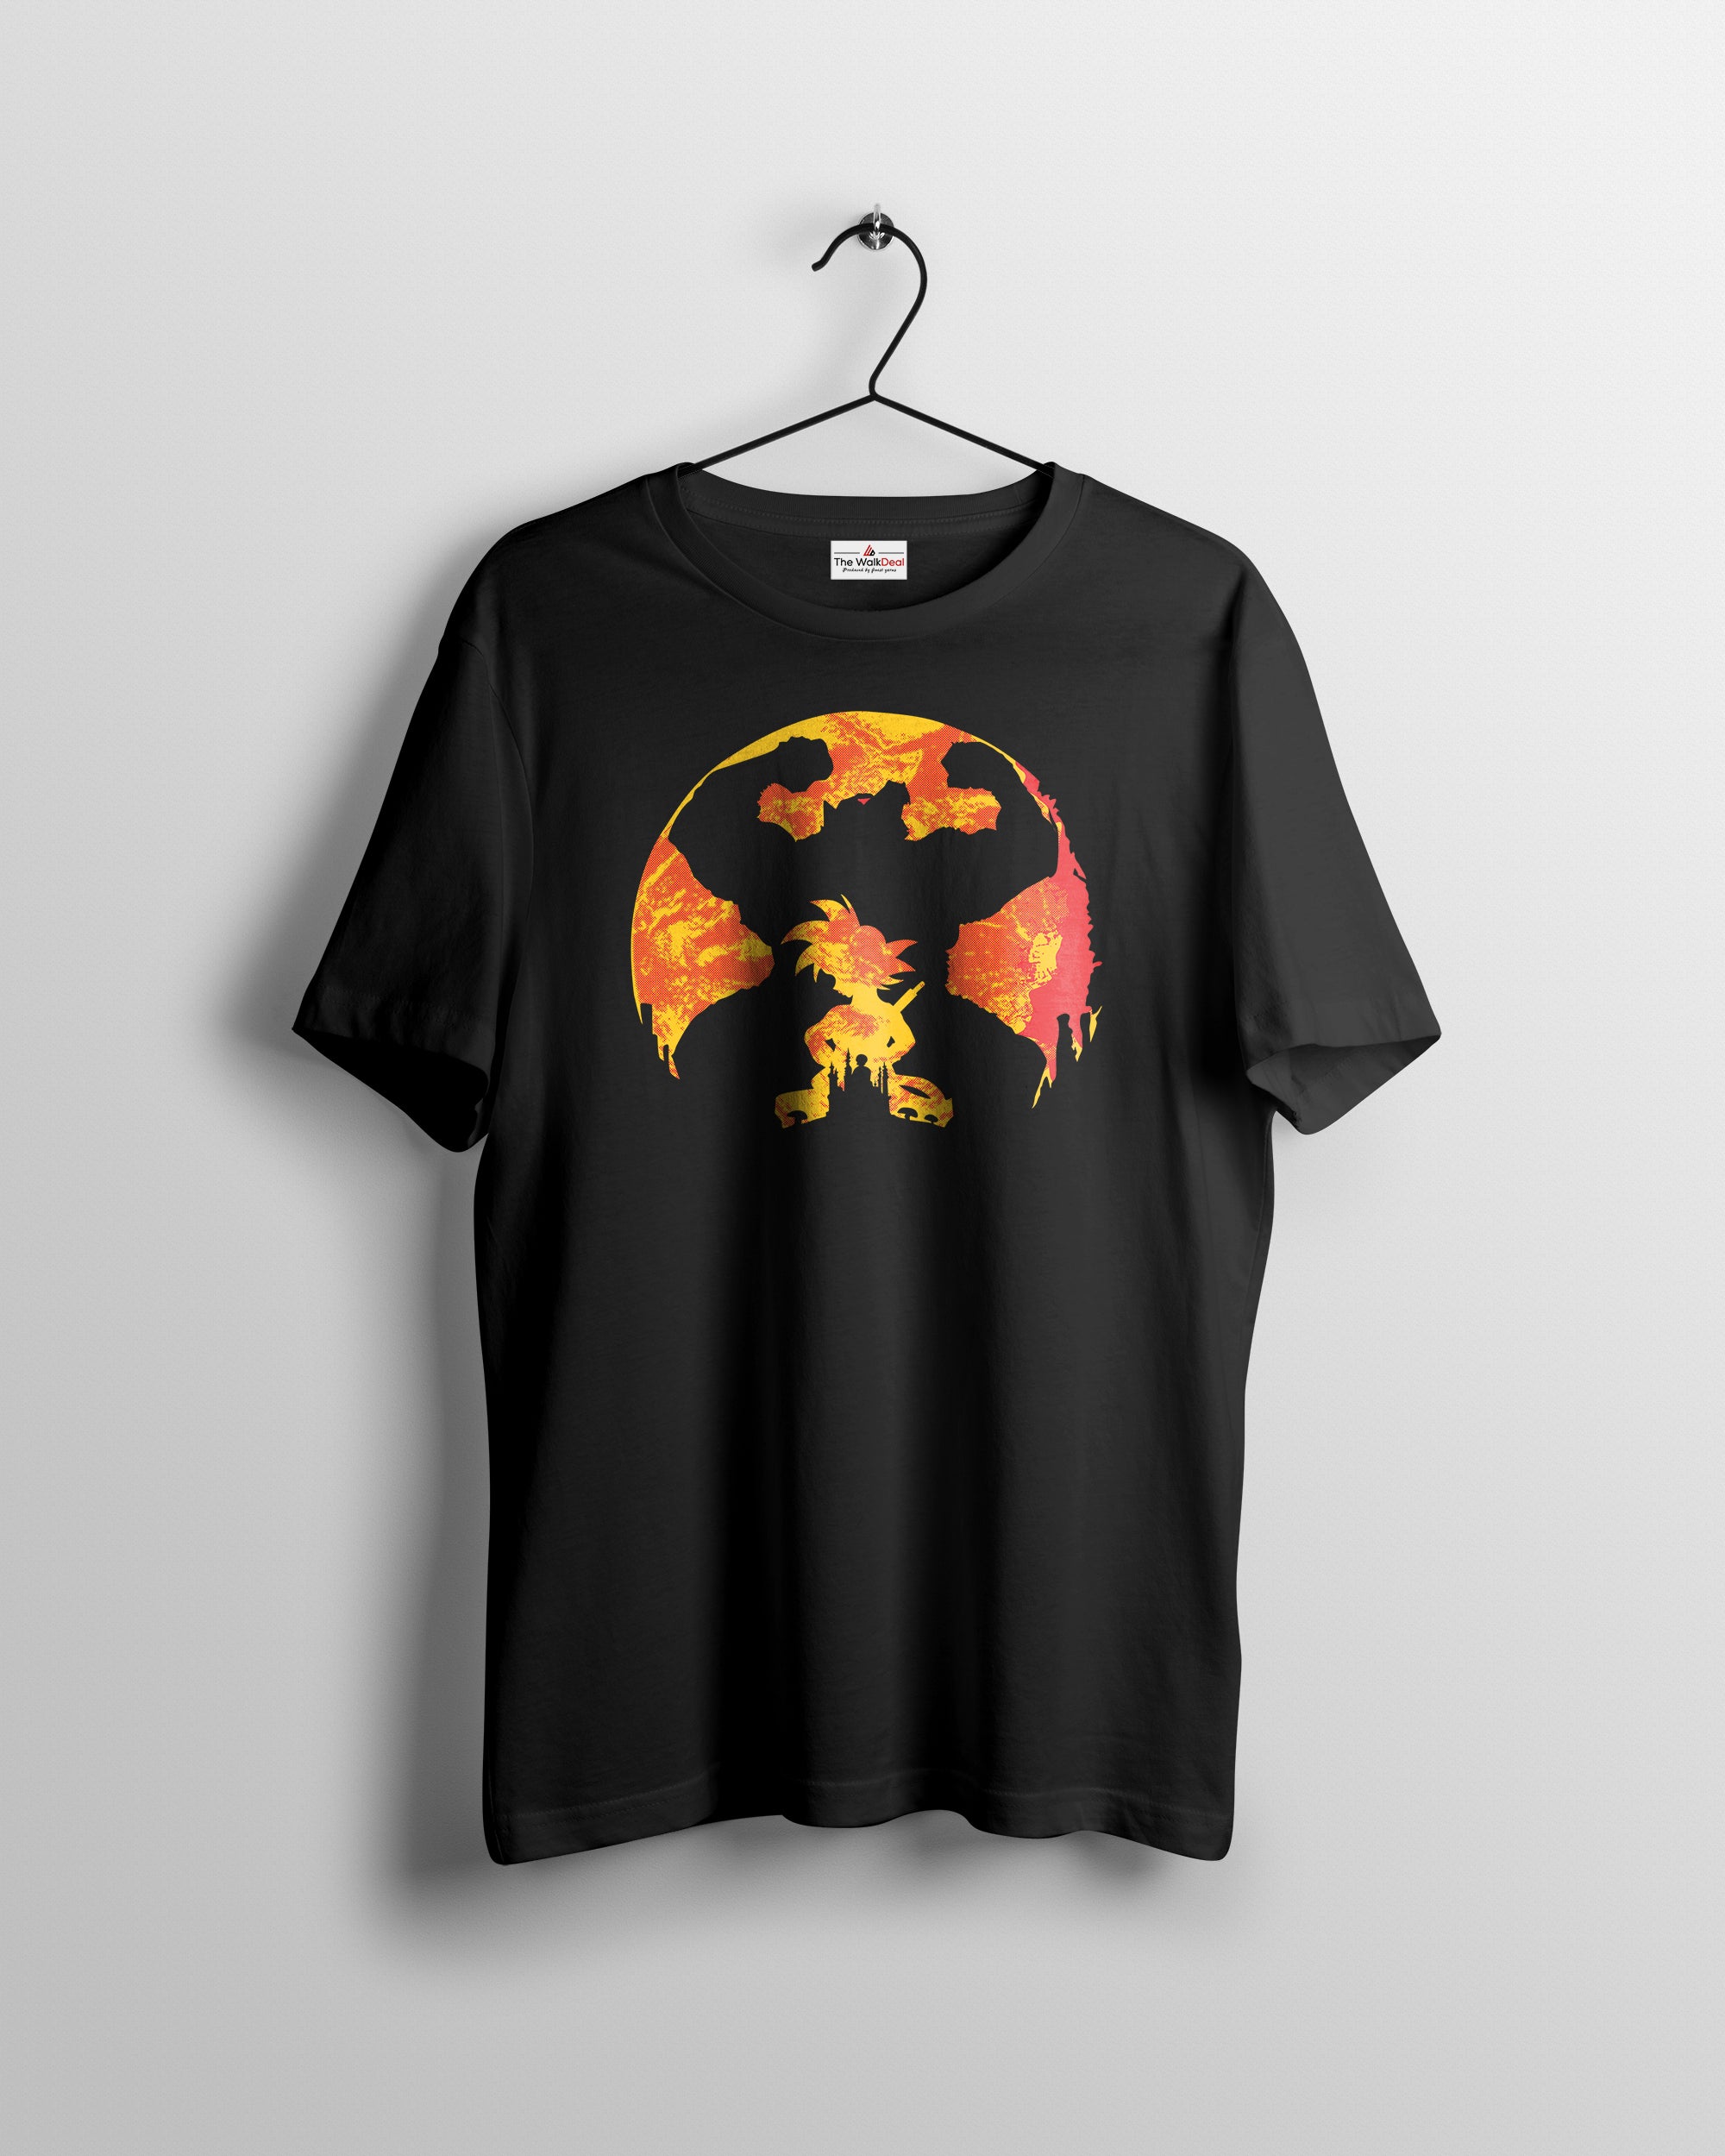 Dragon-Ball T-Shirts For Men || Black || Stylish Tshirts || 100% Cotton || Best T-Shirt For Men's